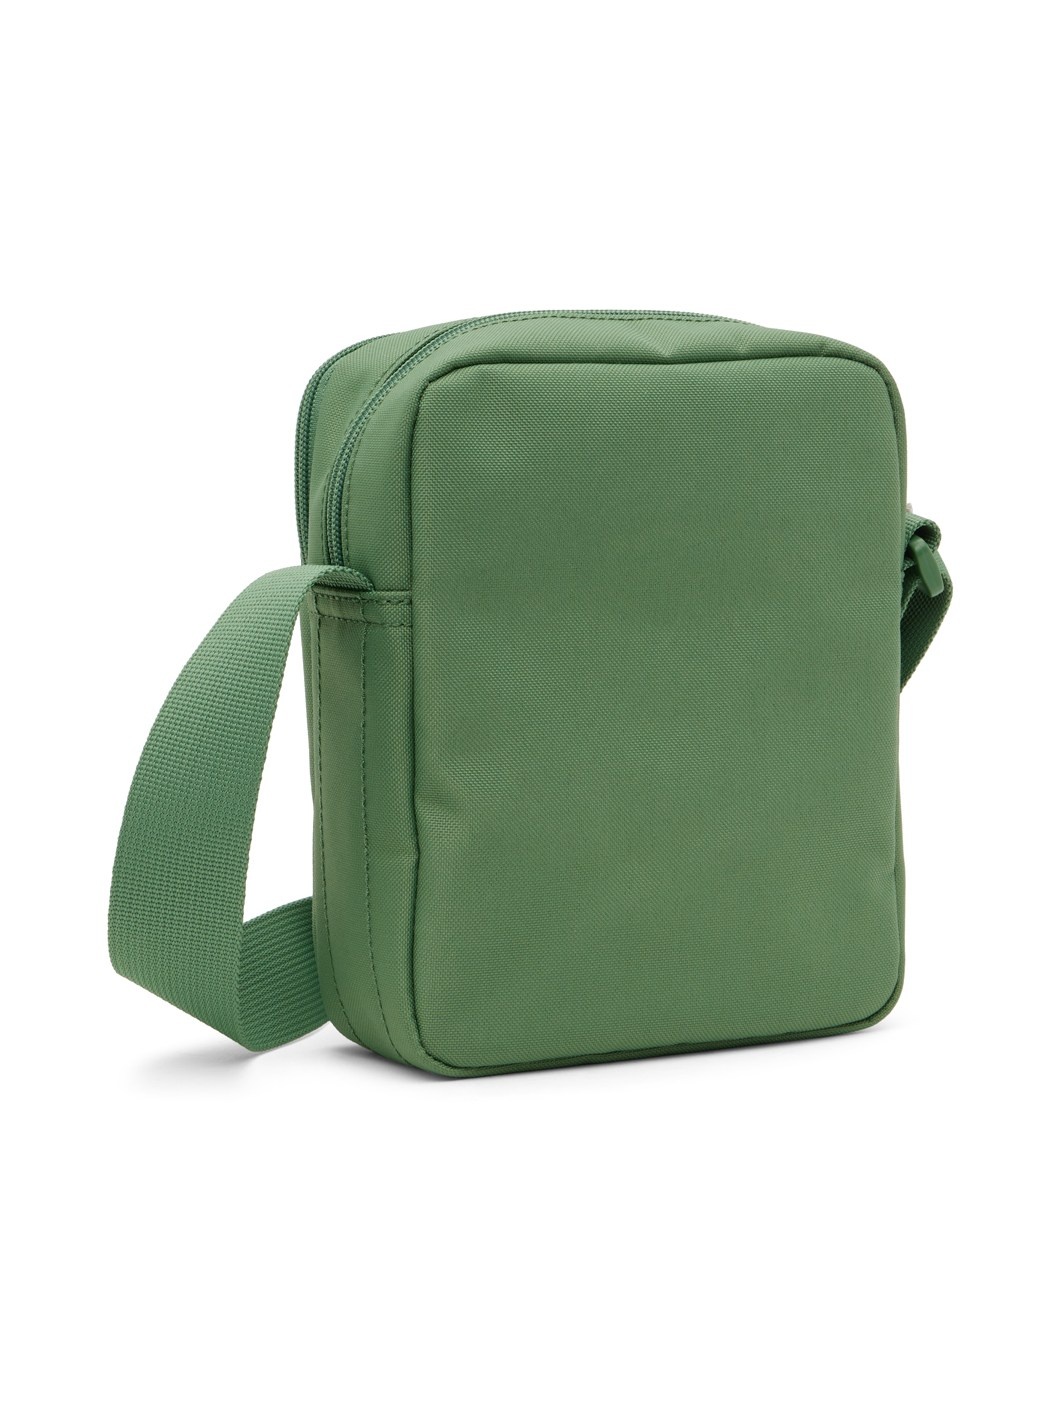 Green Neocroc Bag - 3